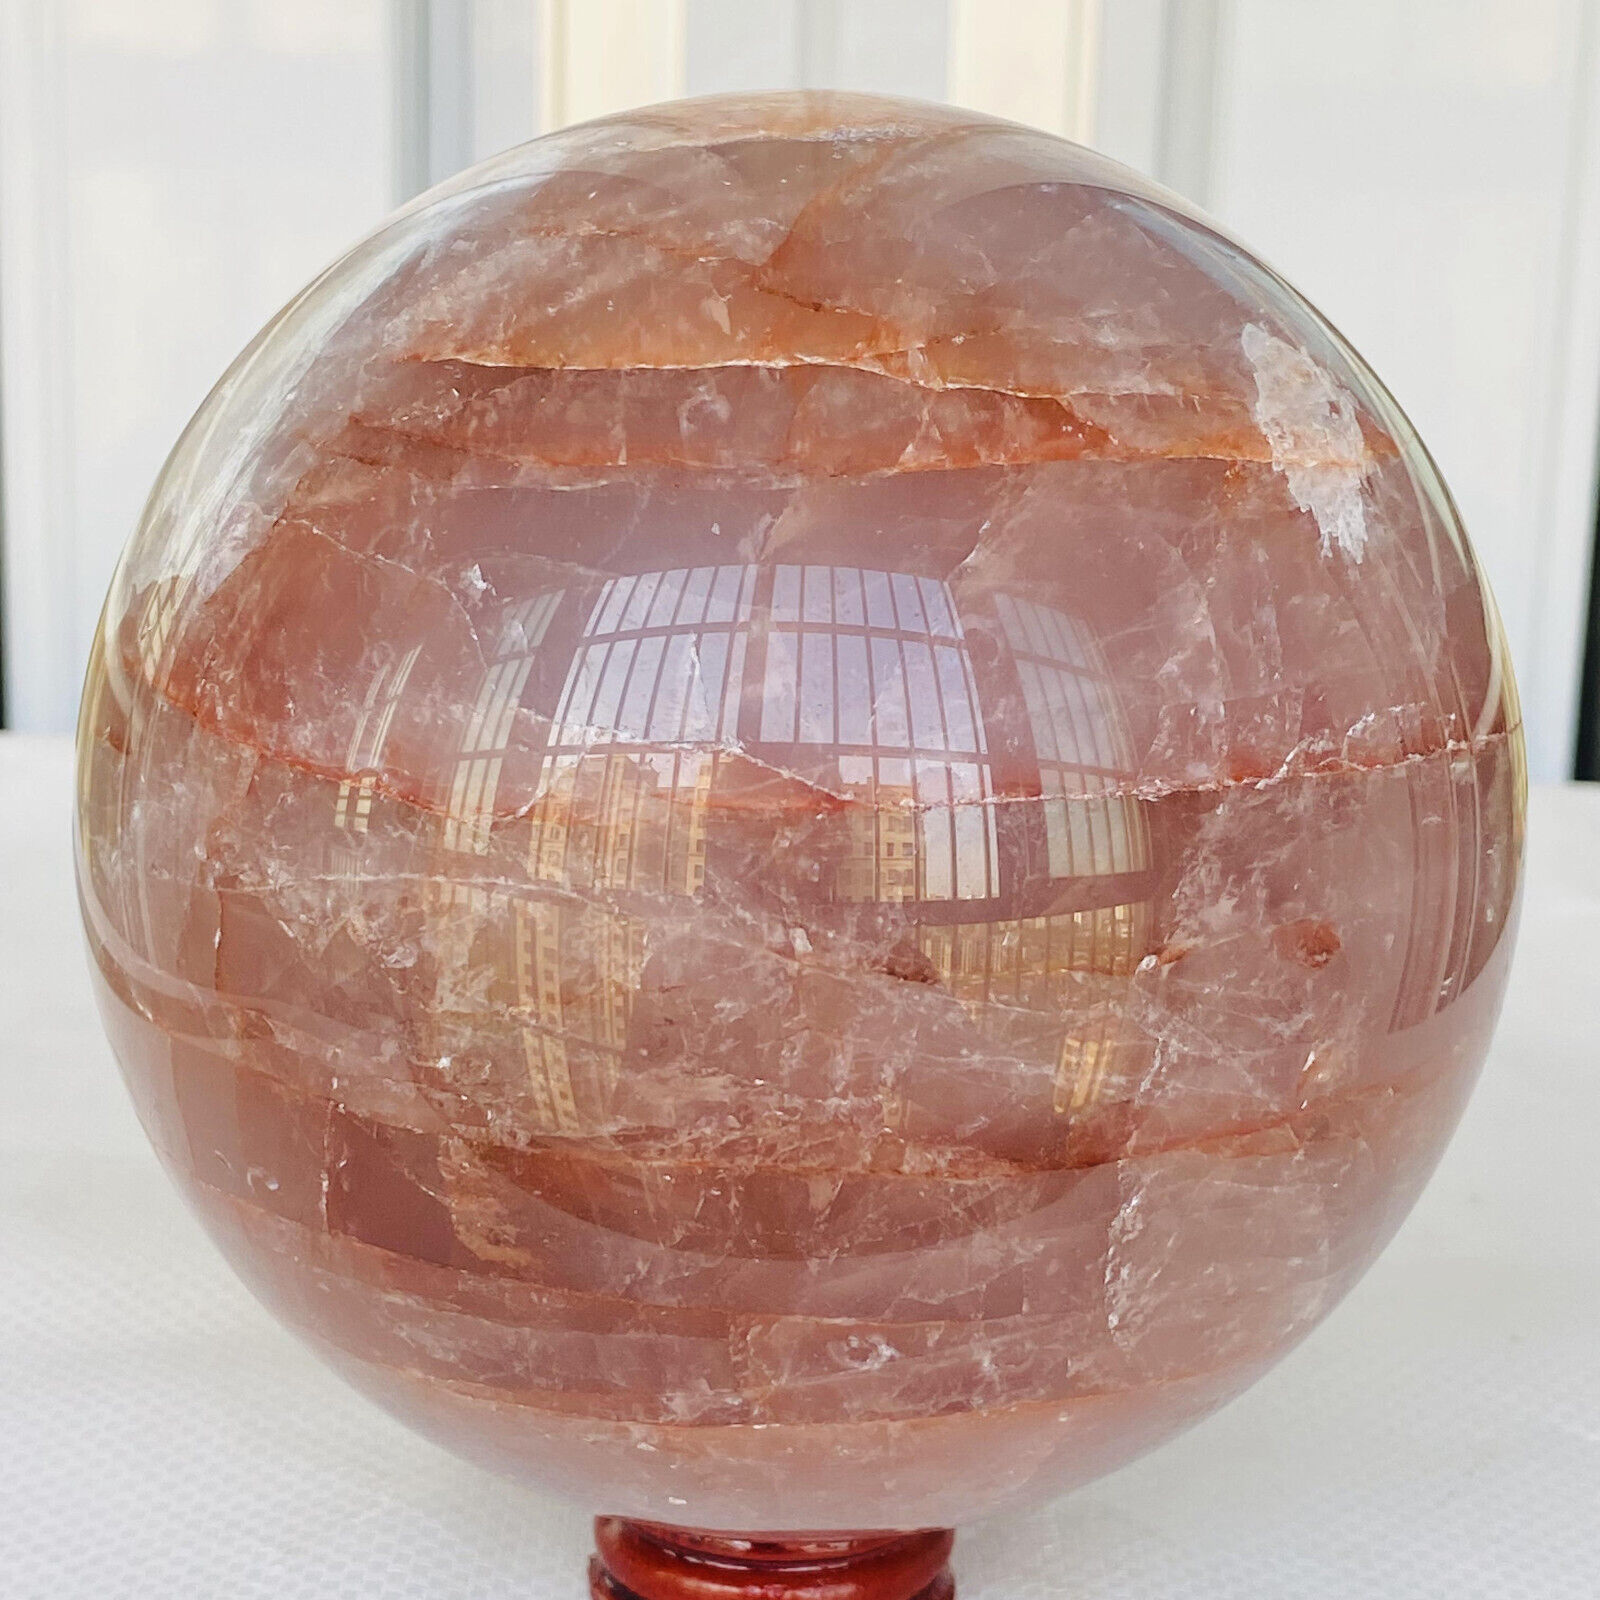 2920g Natural red gum flower ball quartz crystal energy reiki healing